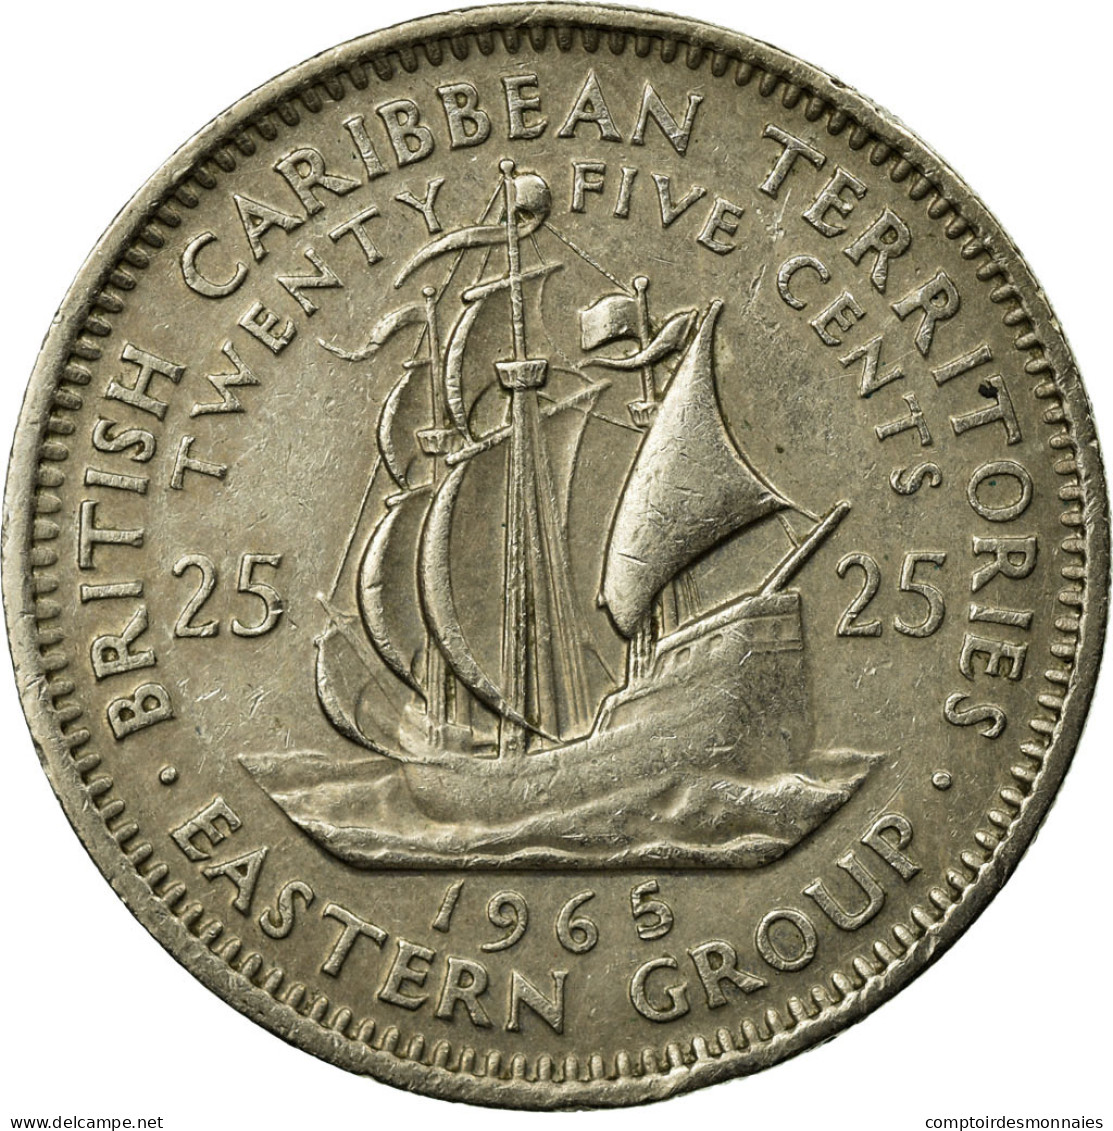 Monnaie, Etats Des Caraibes Orientales, Elizabeth II, 25 Cents, 1965, TTB - Caribe Británica (Territorios Del)